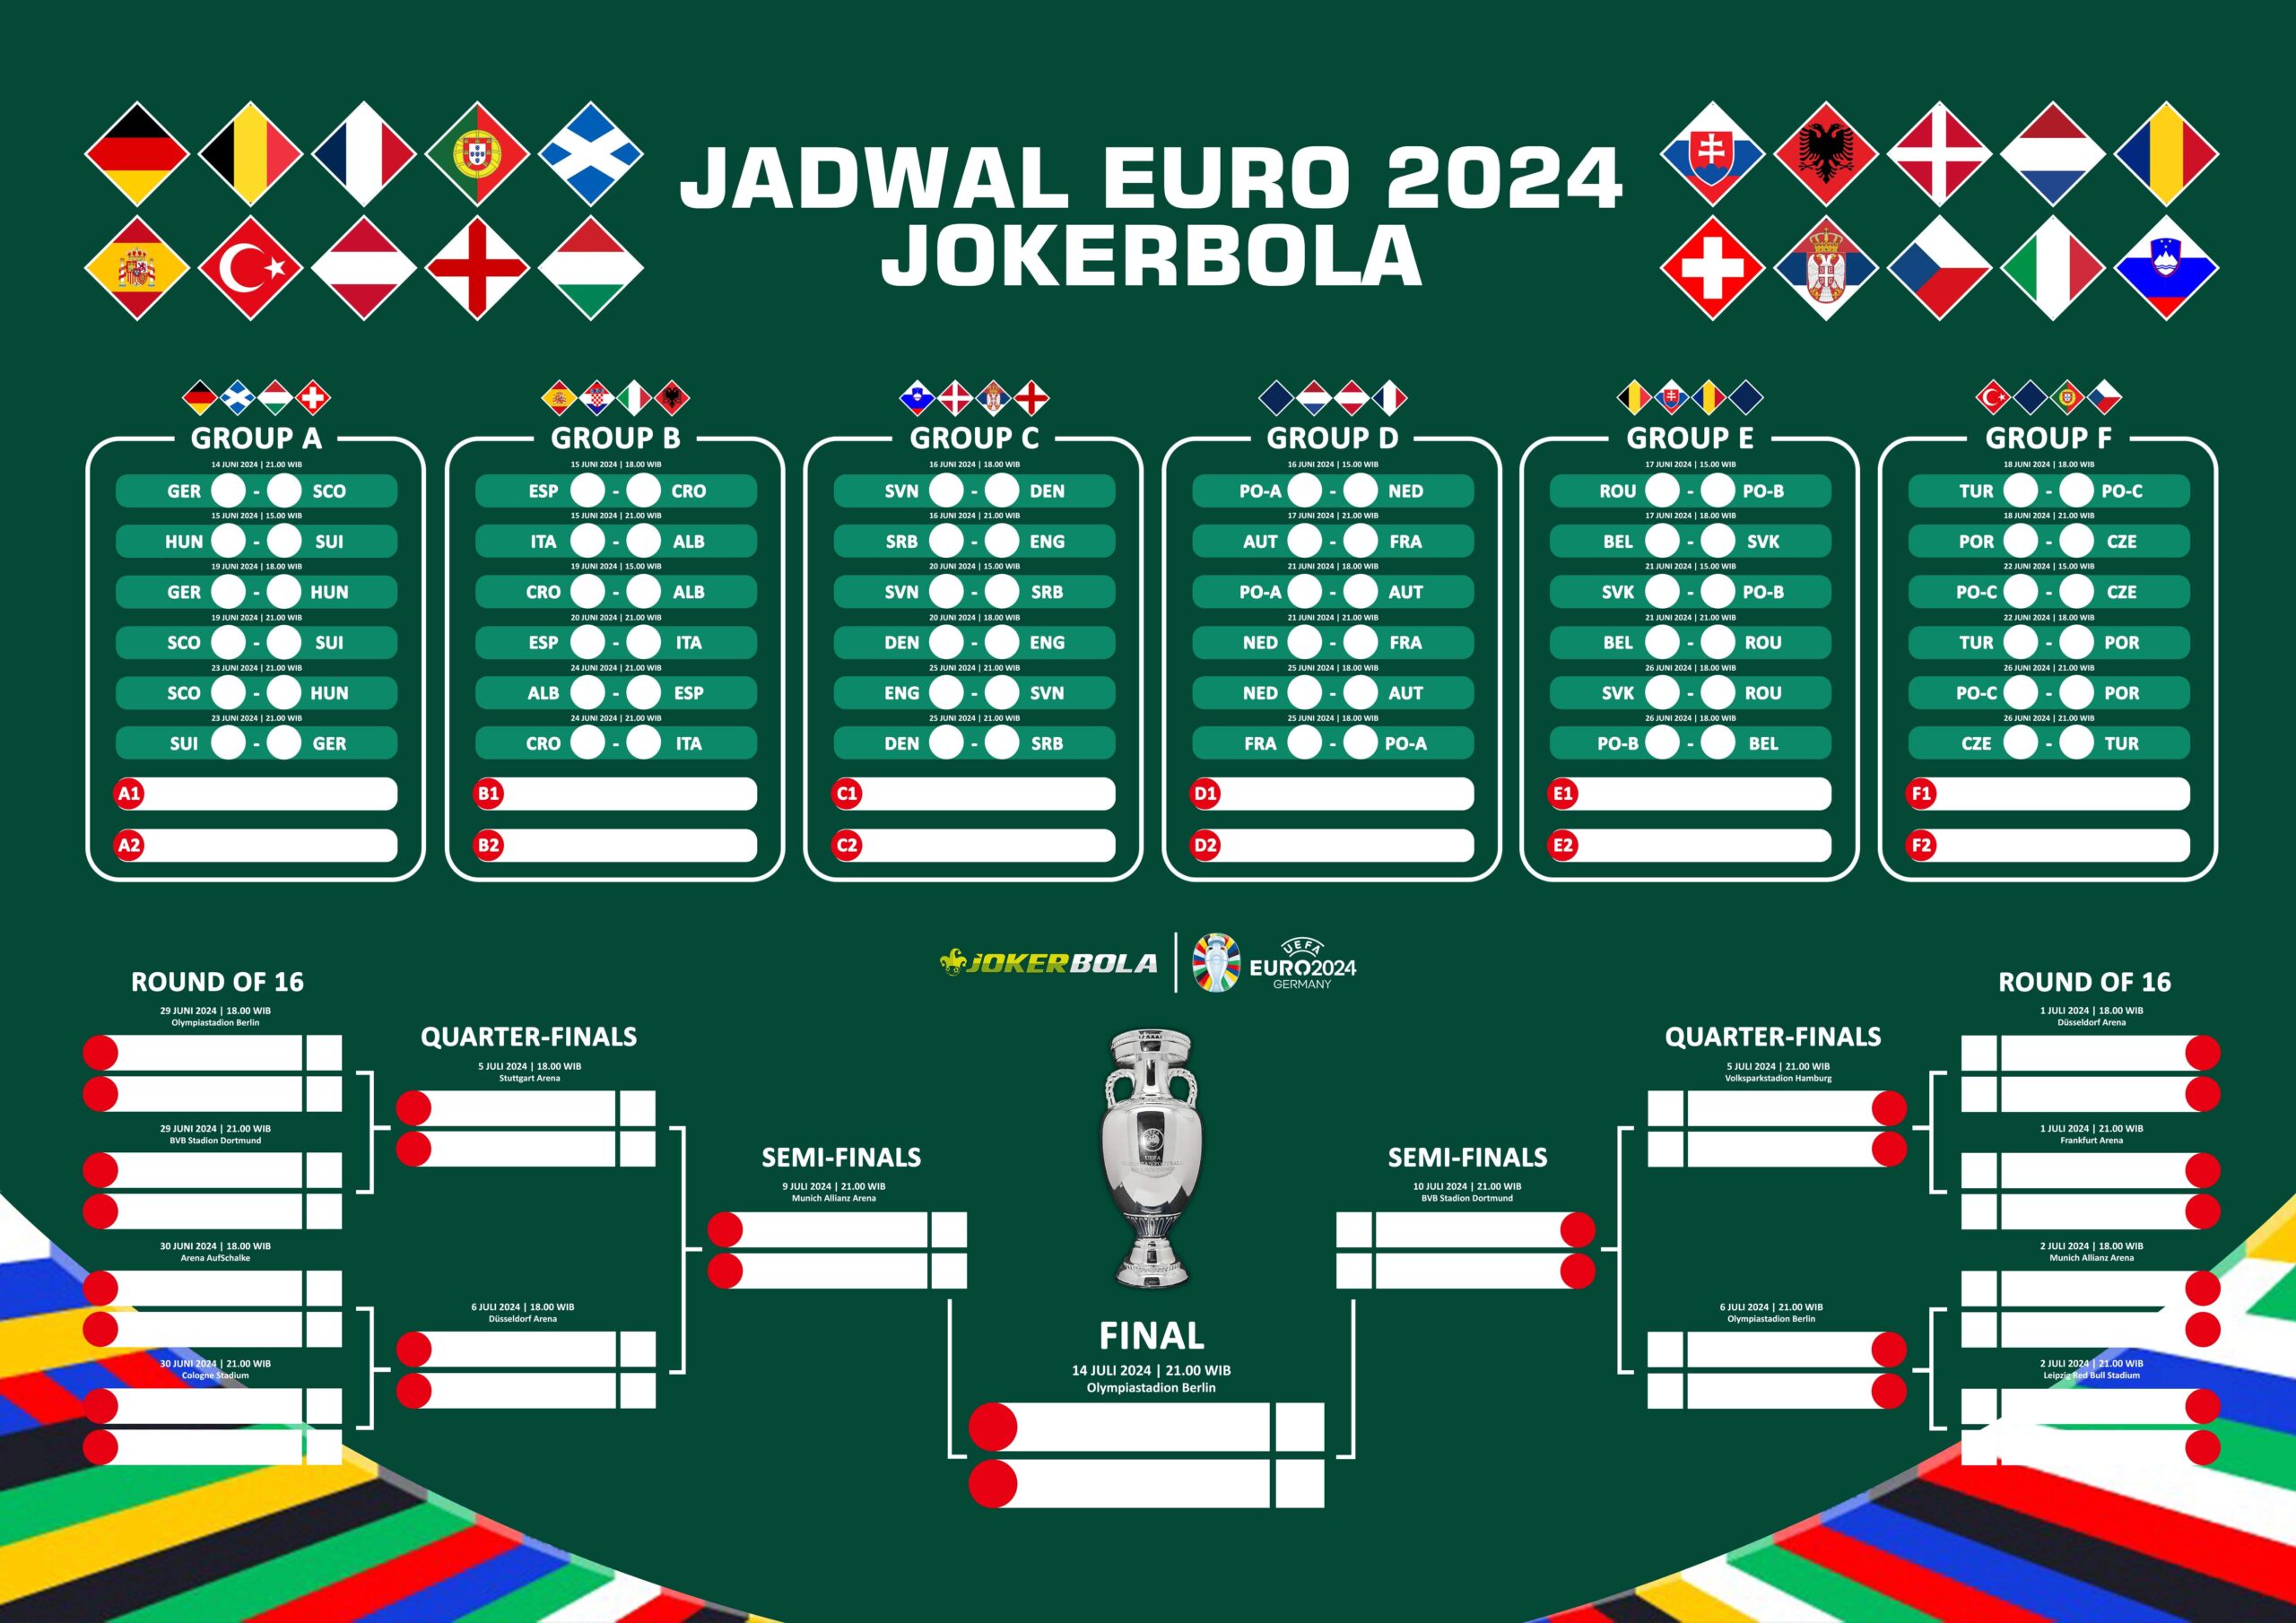 Jadwal Euro 2024 Germany Jokerbola news